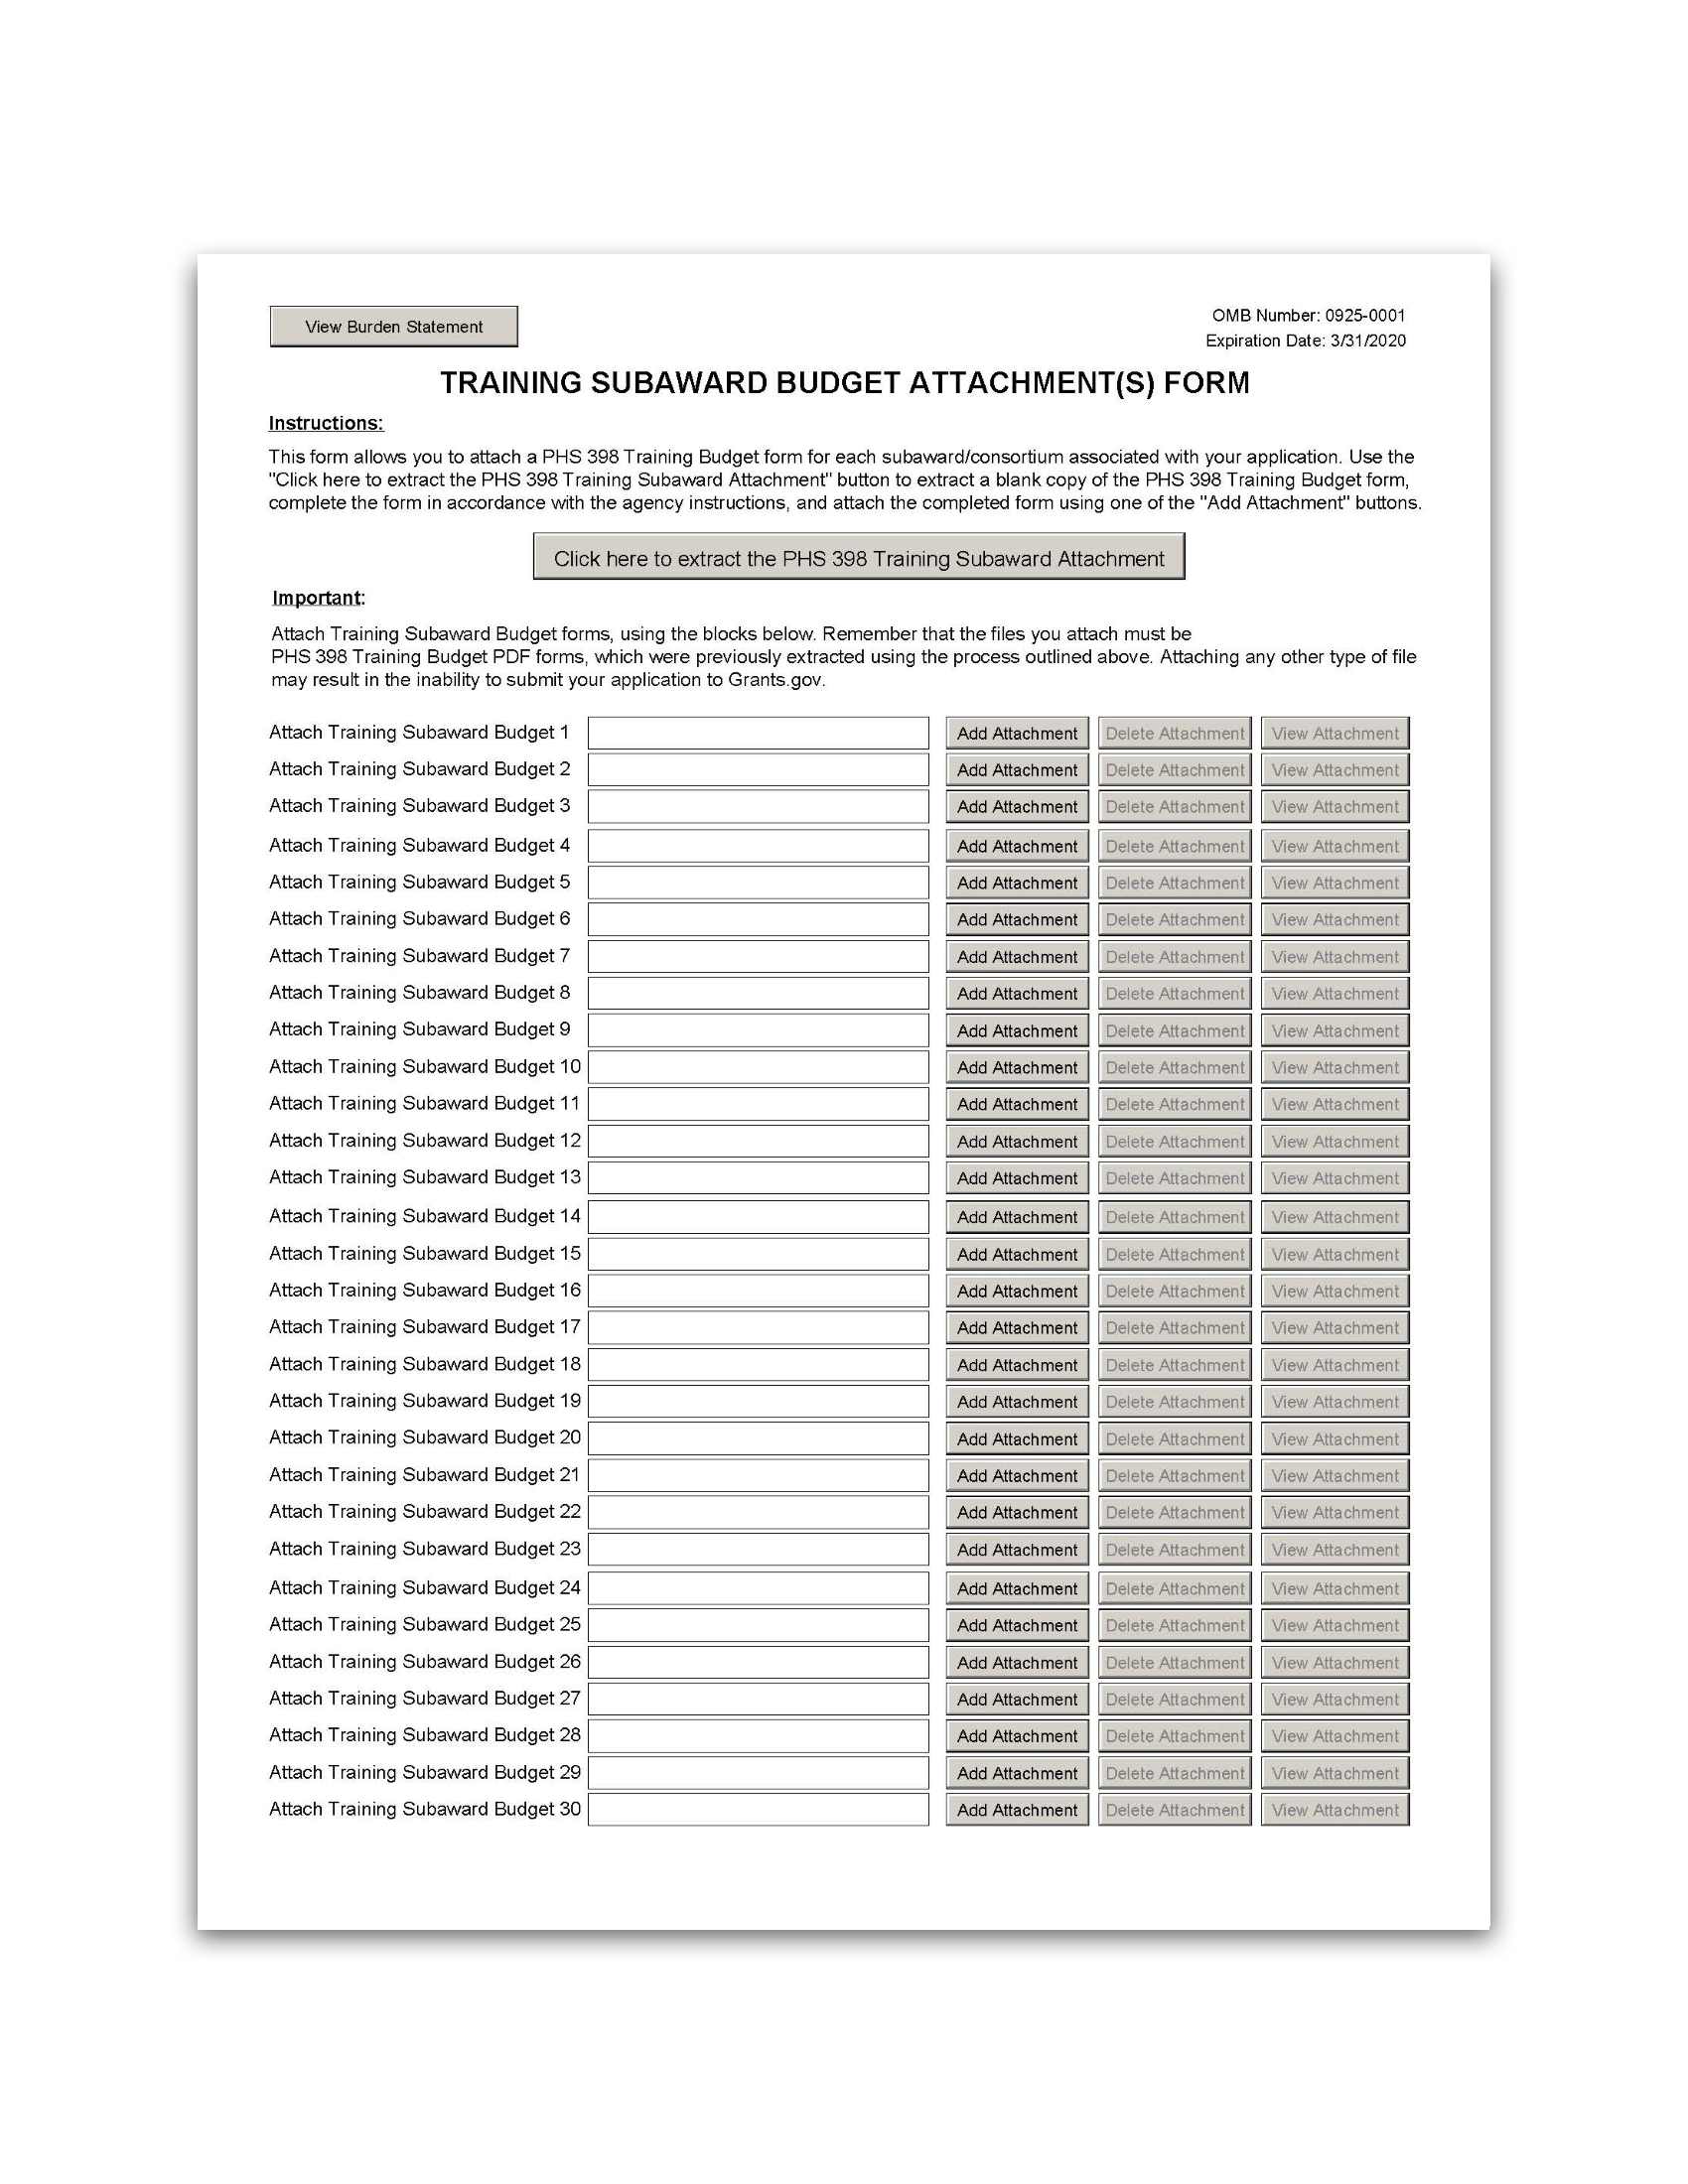 Training Subaward Budget Attachment Form